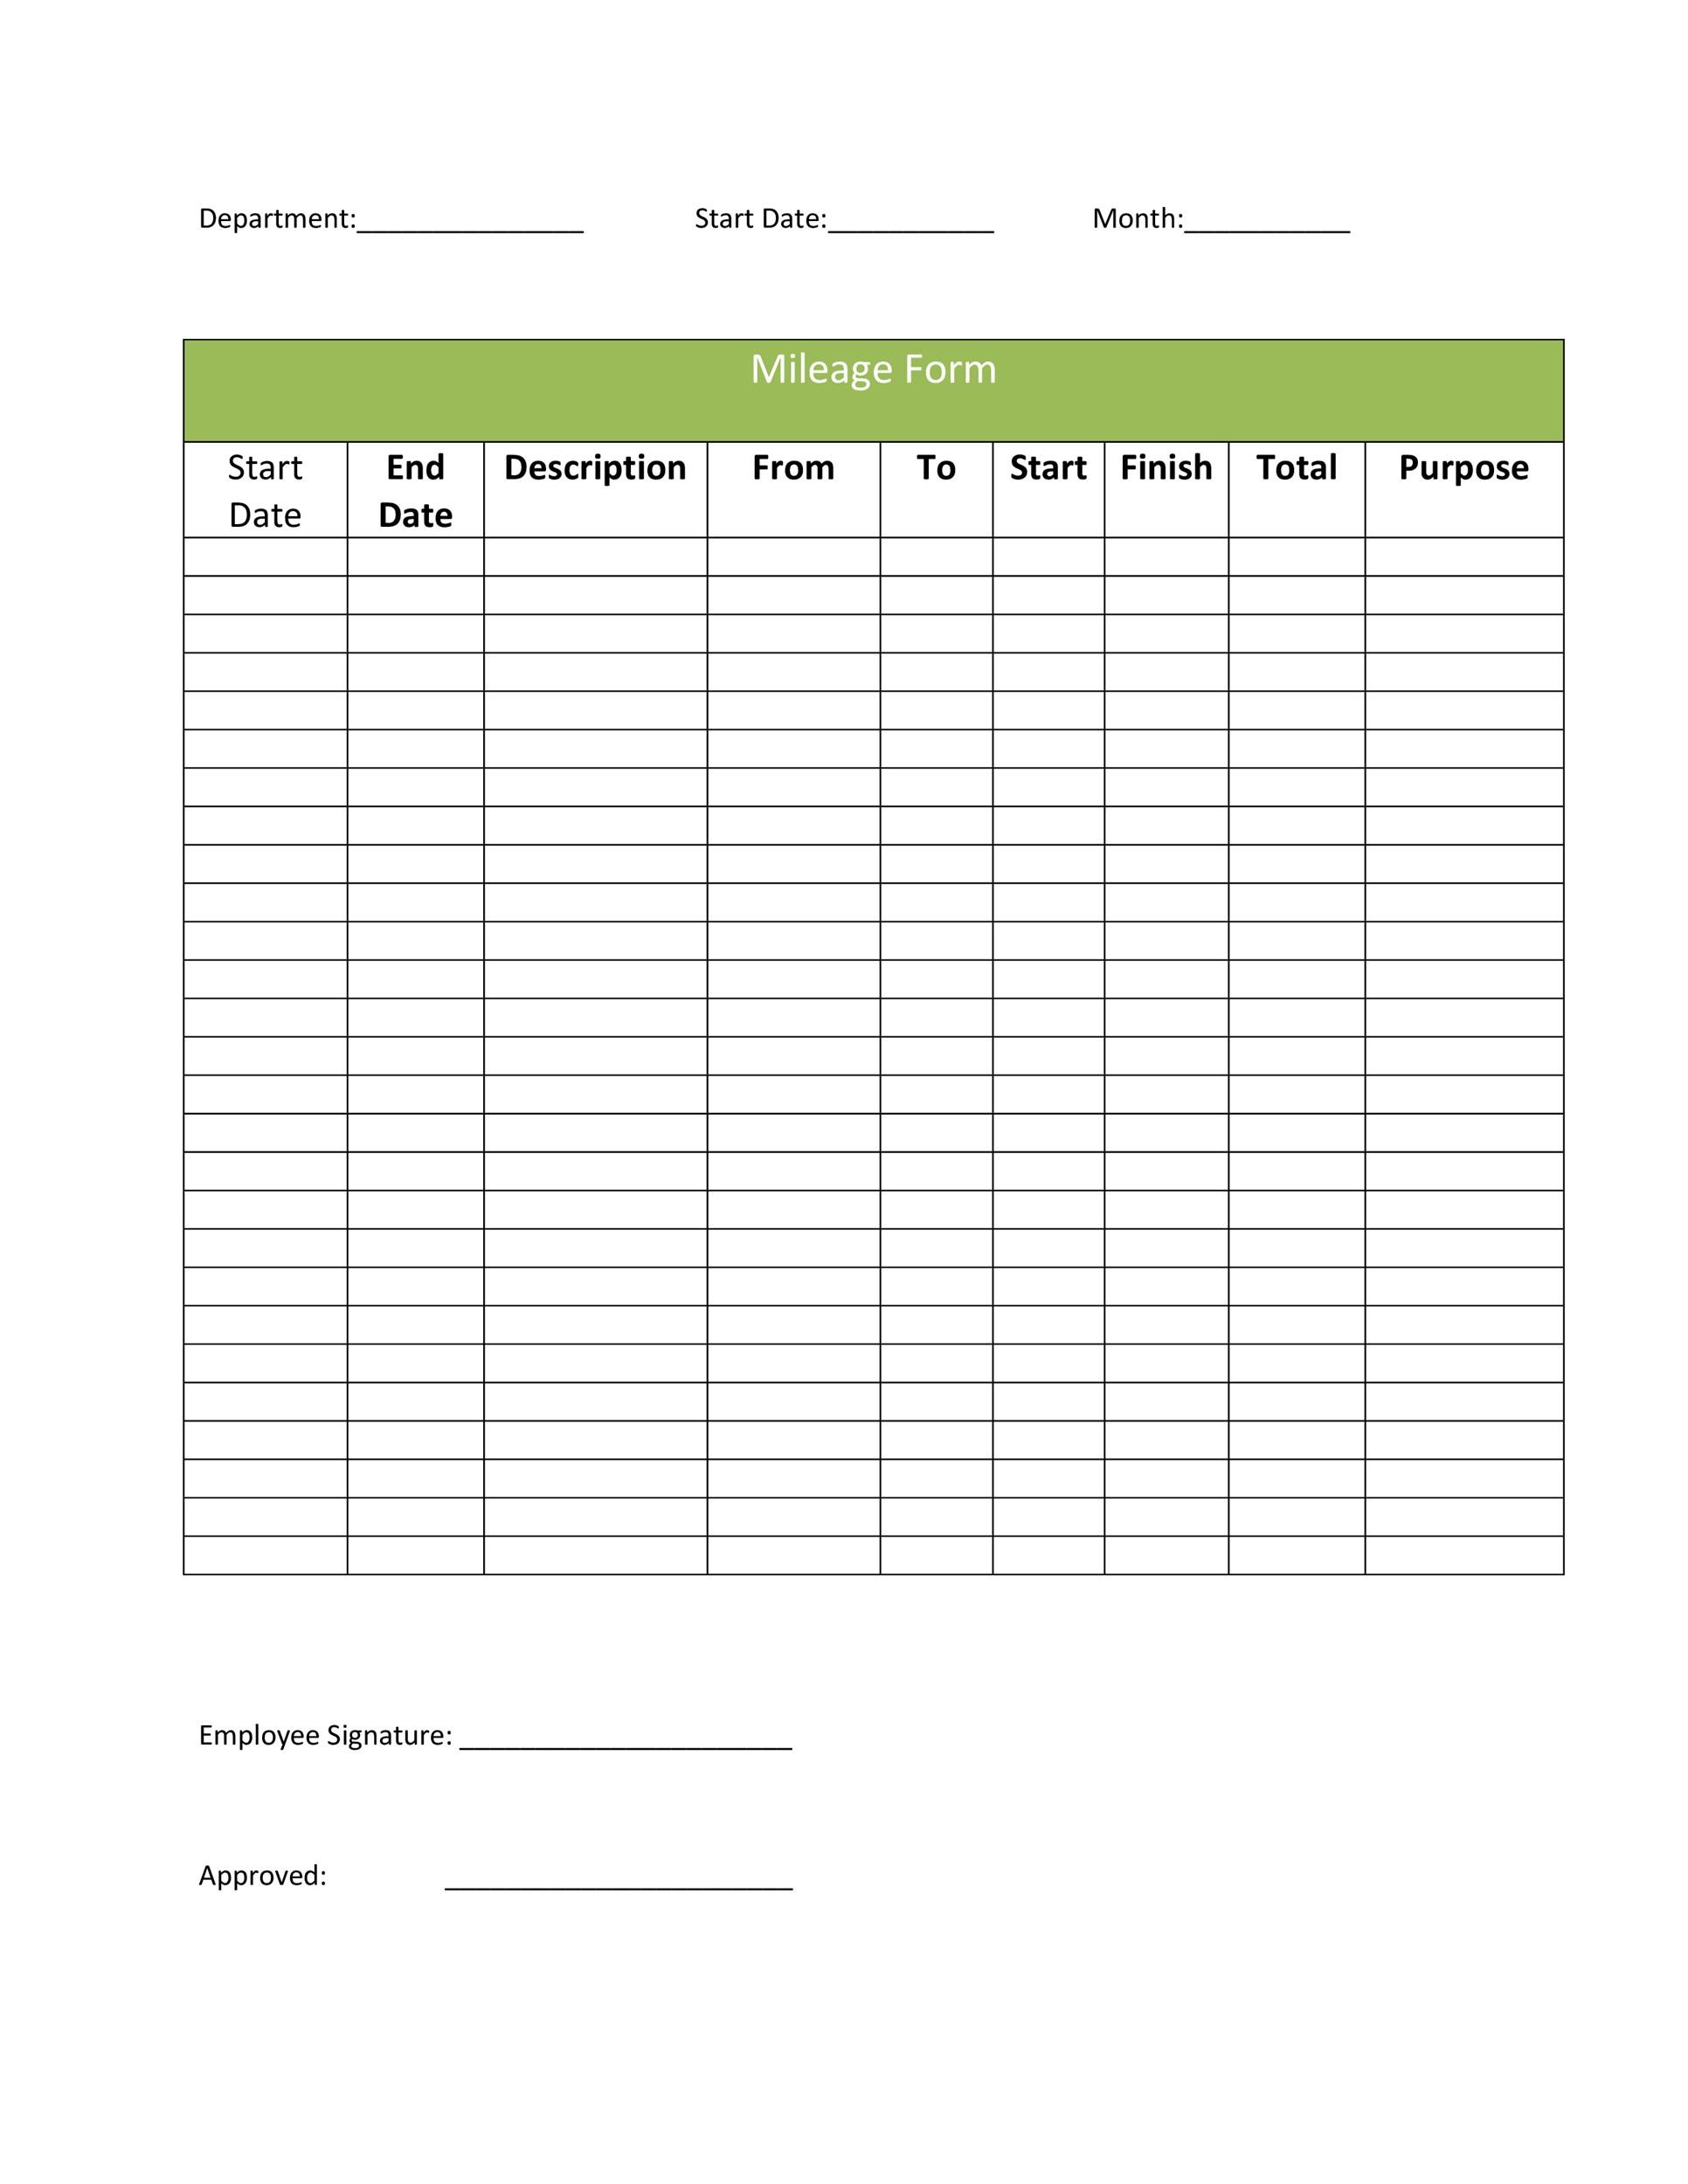 mileage-log-templates-19-free-printable-word-excel-pdf-formats